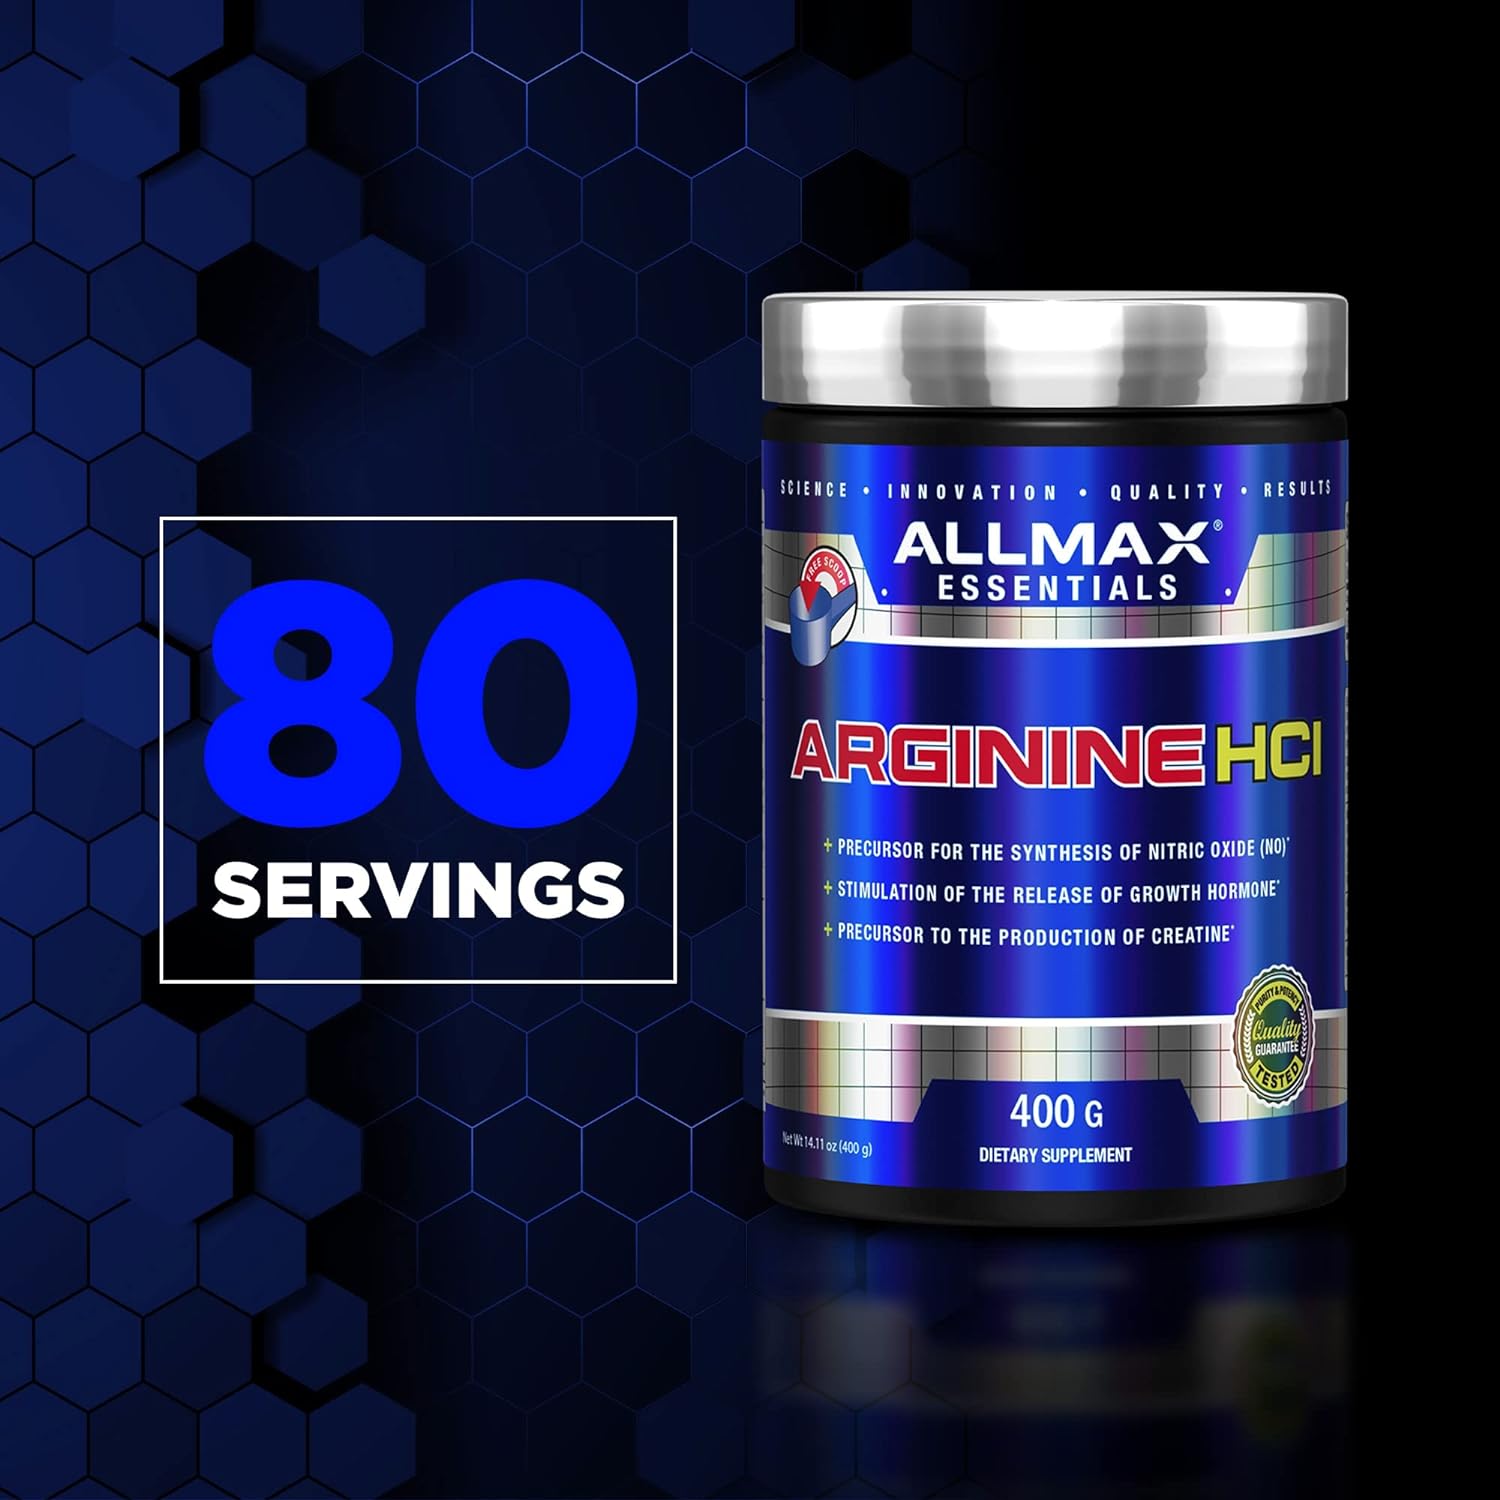 آرژنین اچ سی ال آلمکس مدل Allmax Nutrition Arginine - ارسال 10 الی 15 روز کاری